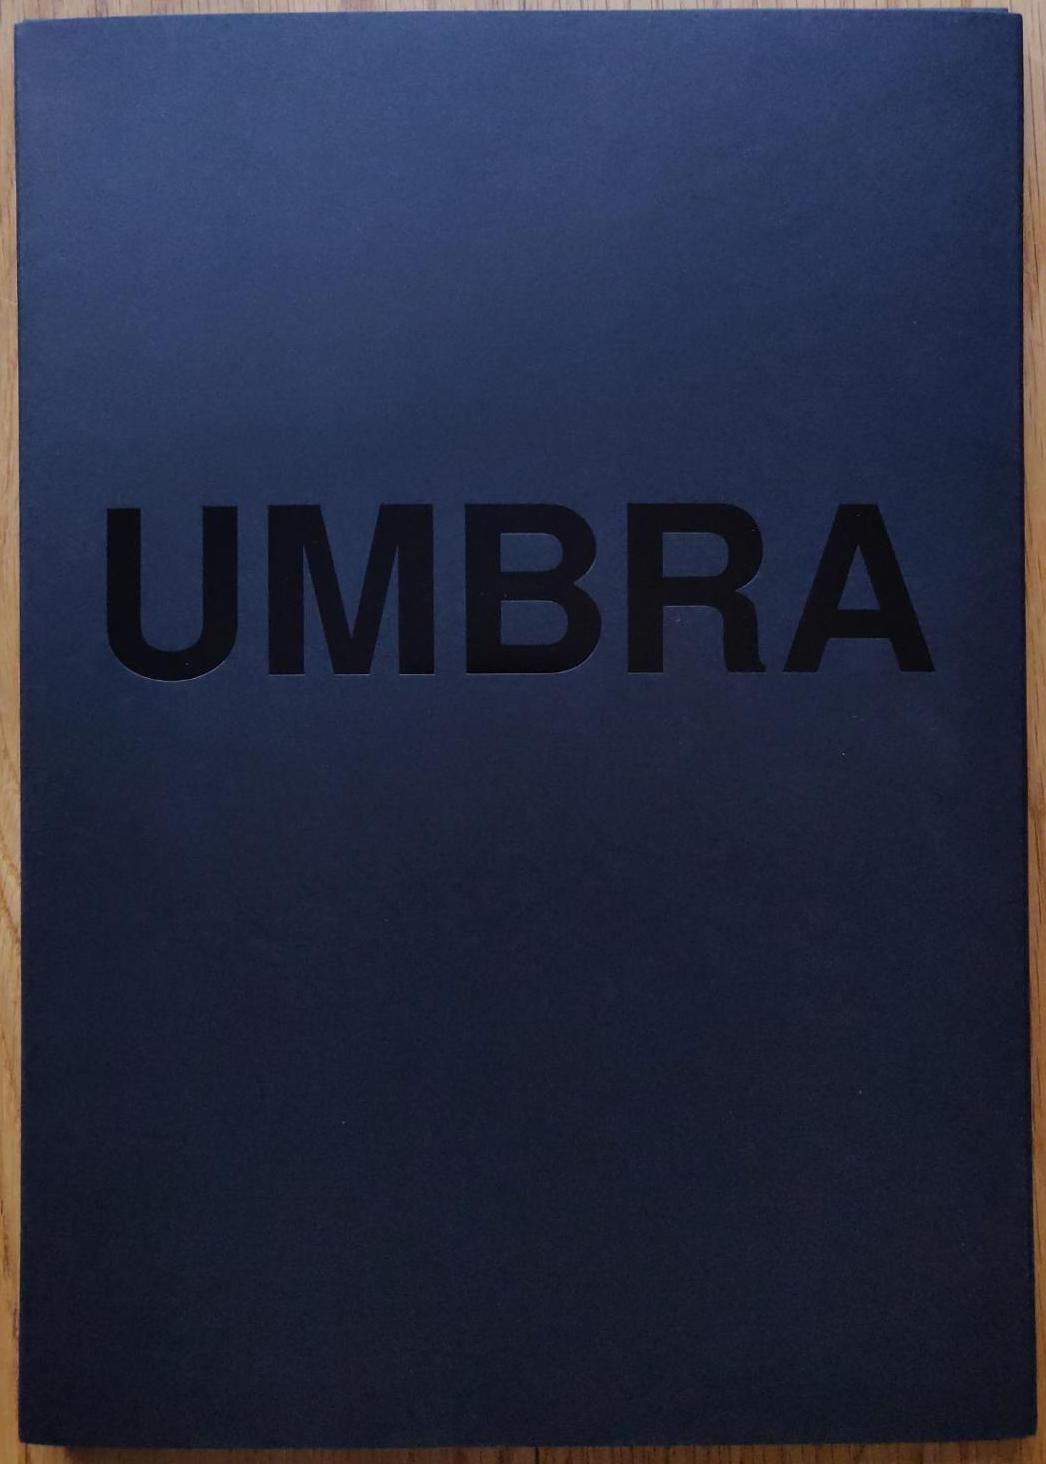 Umbra by Viviane Sassen, Photography